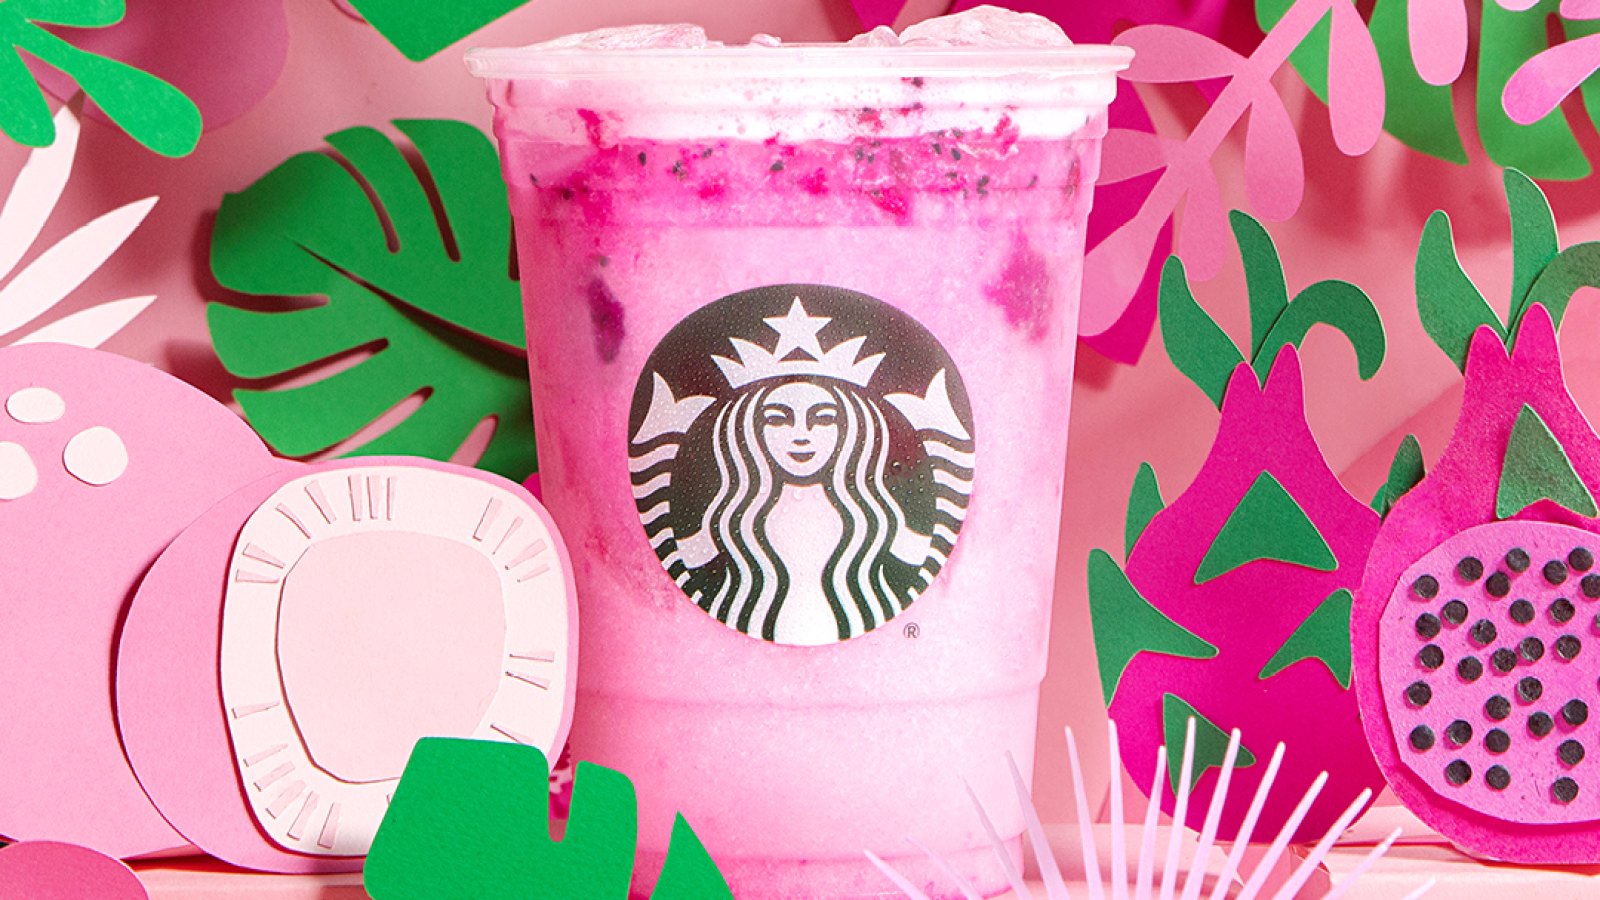 Starbucks Brings Back Fan-Favorite Frappuccinos Debuts New Pink Dragon Drink